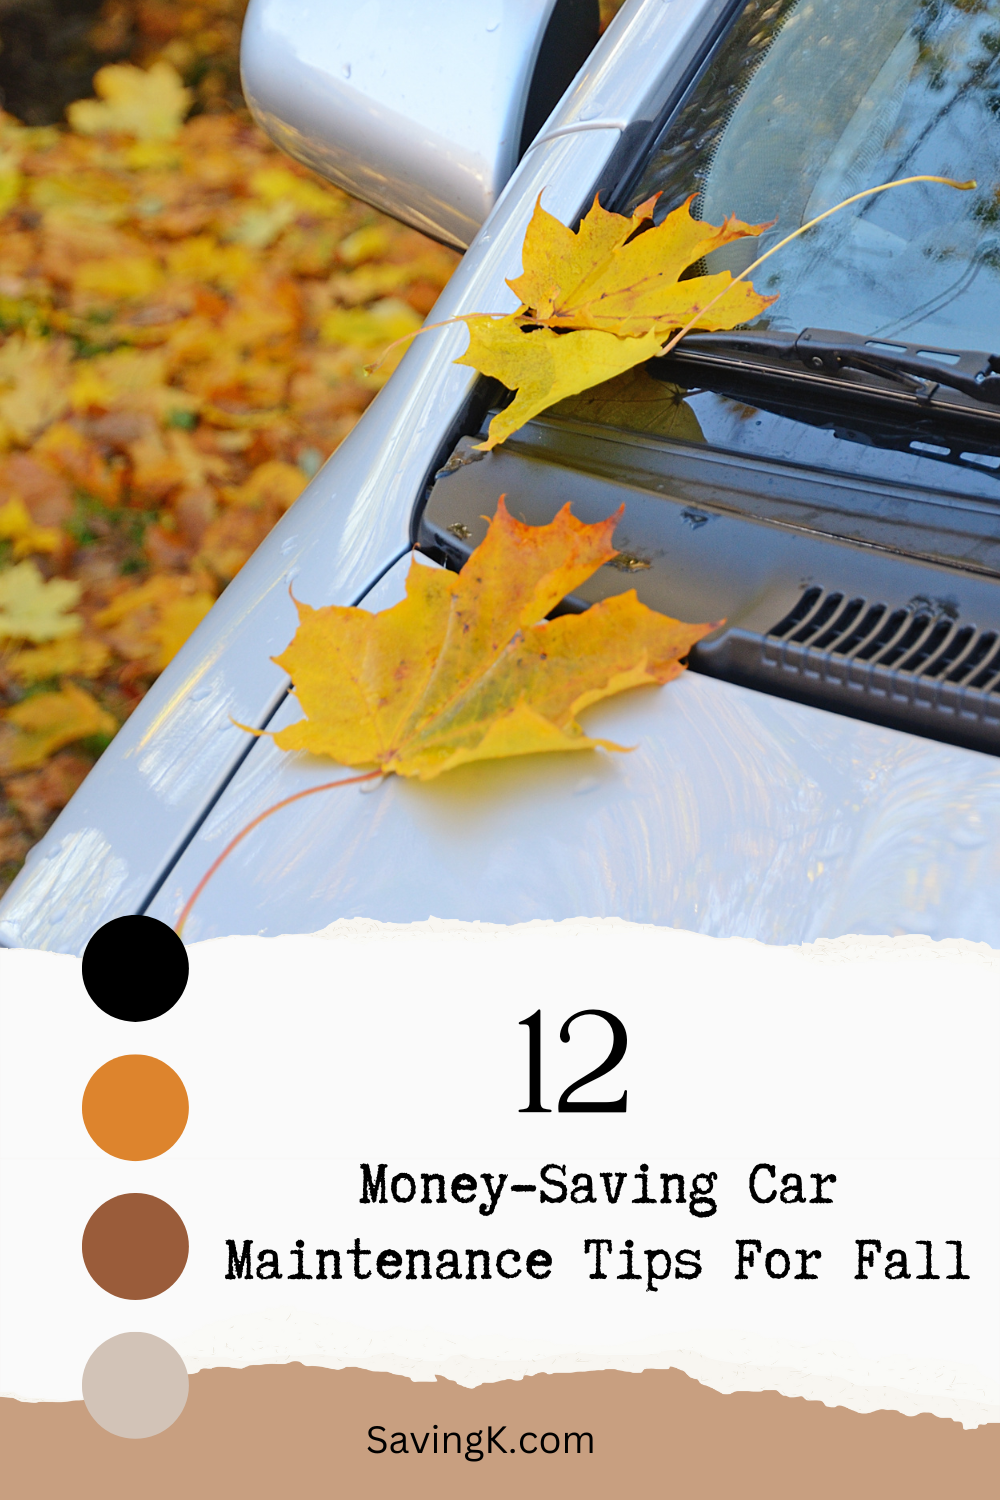 Money-Saving Car Maintenance Tips For Fall